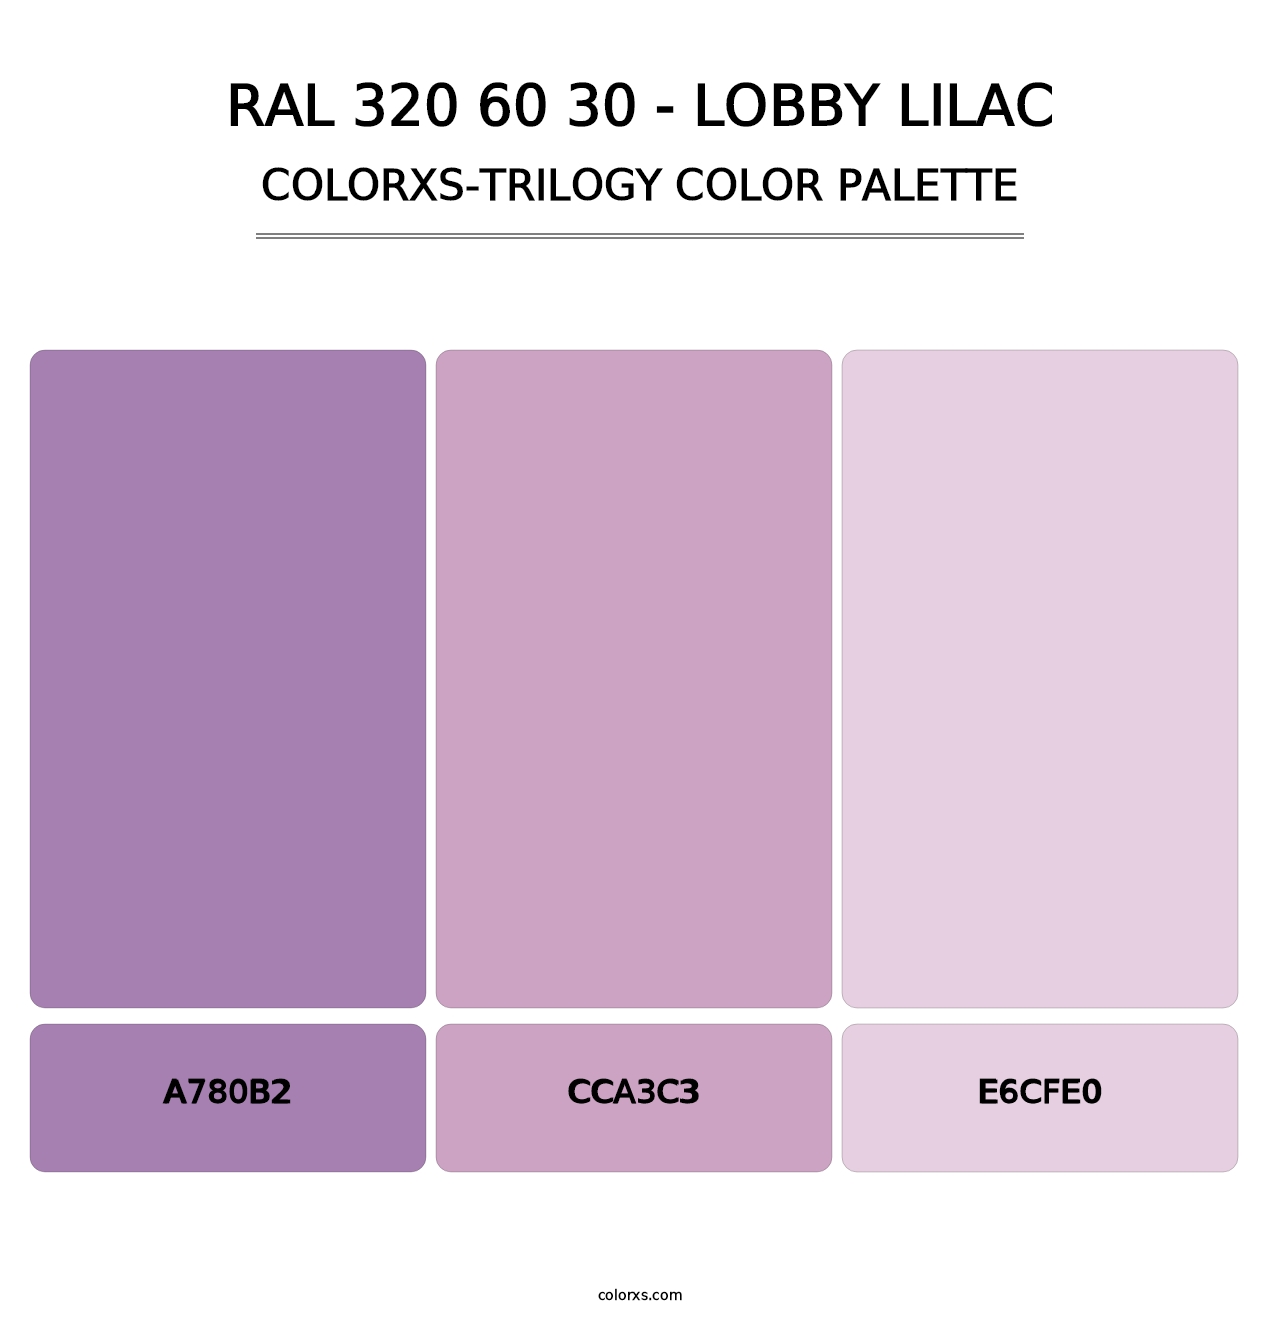 RAL 320 60 30 - Lobby Lilac - Colorxs Trilogy Palette